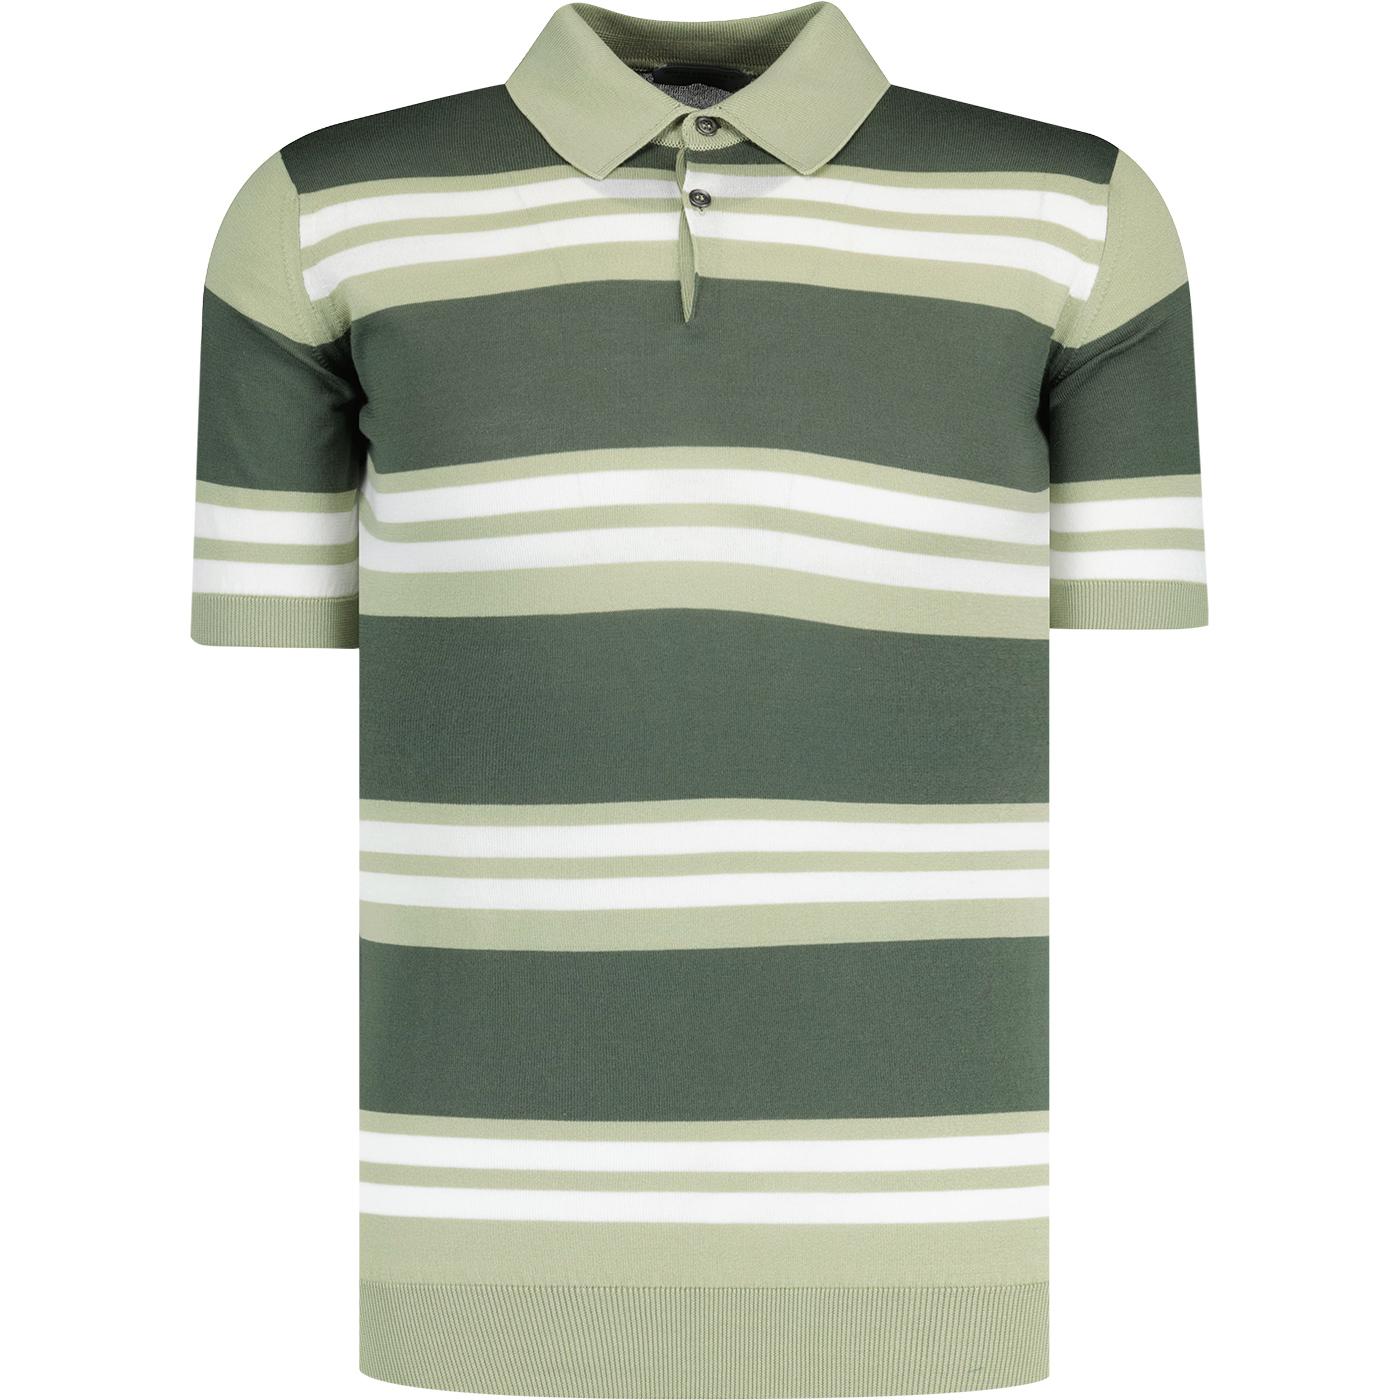 Freen John Smedley Striped Polo Shirt Desert Green